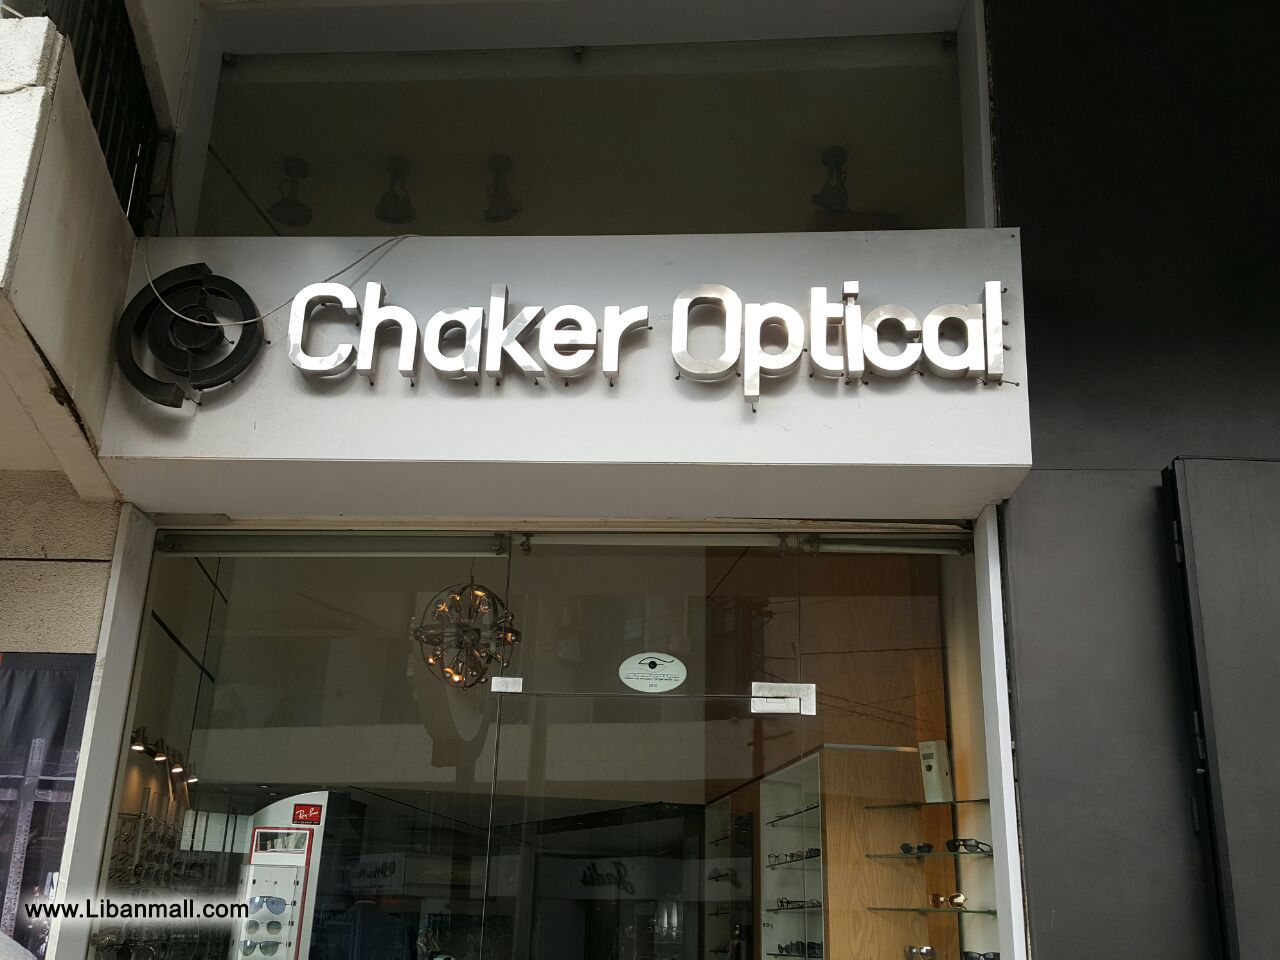 Chaker Optical, optics, eye glasses